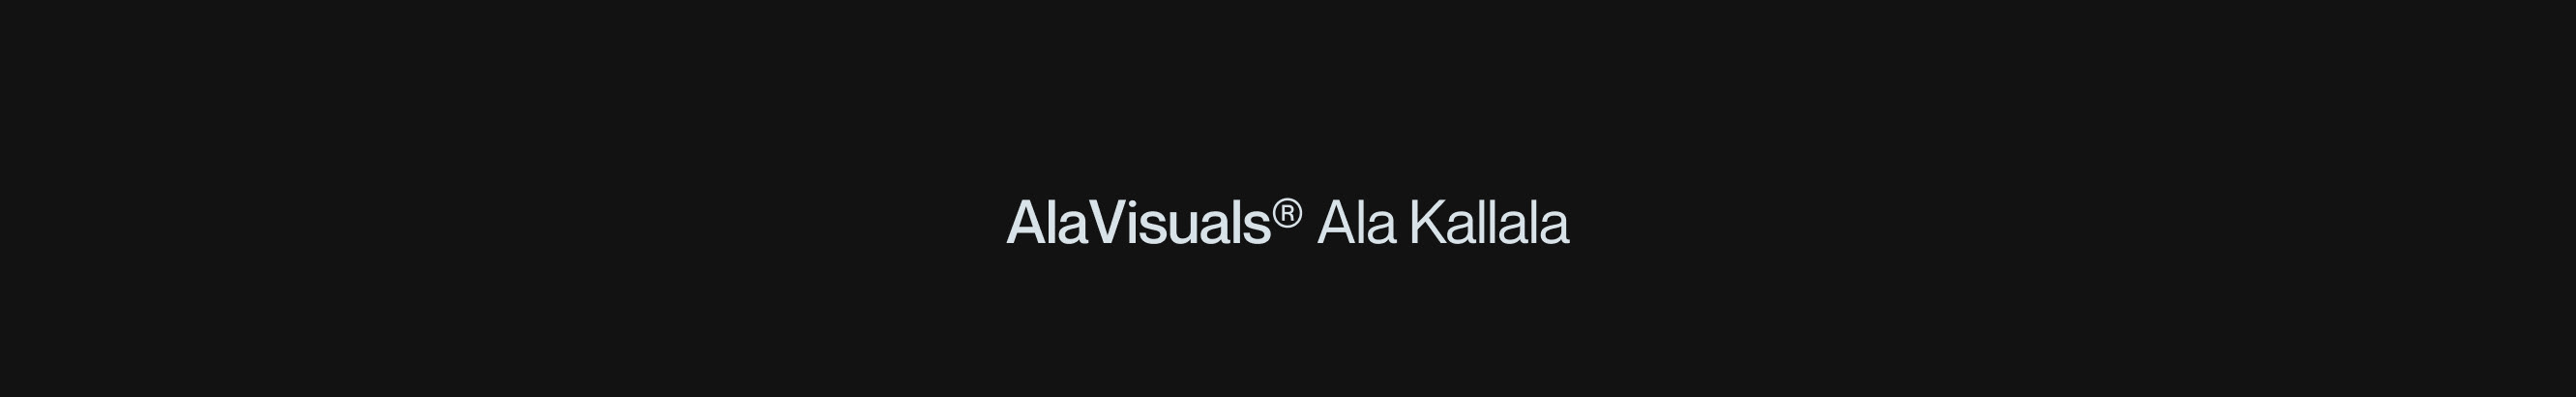 Ala Kallalas profilbanner